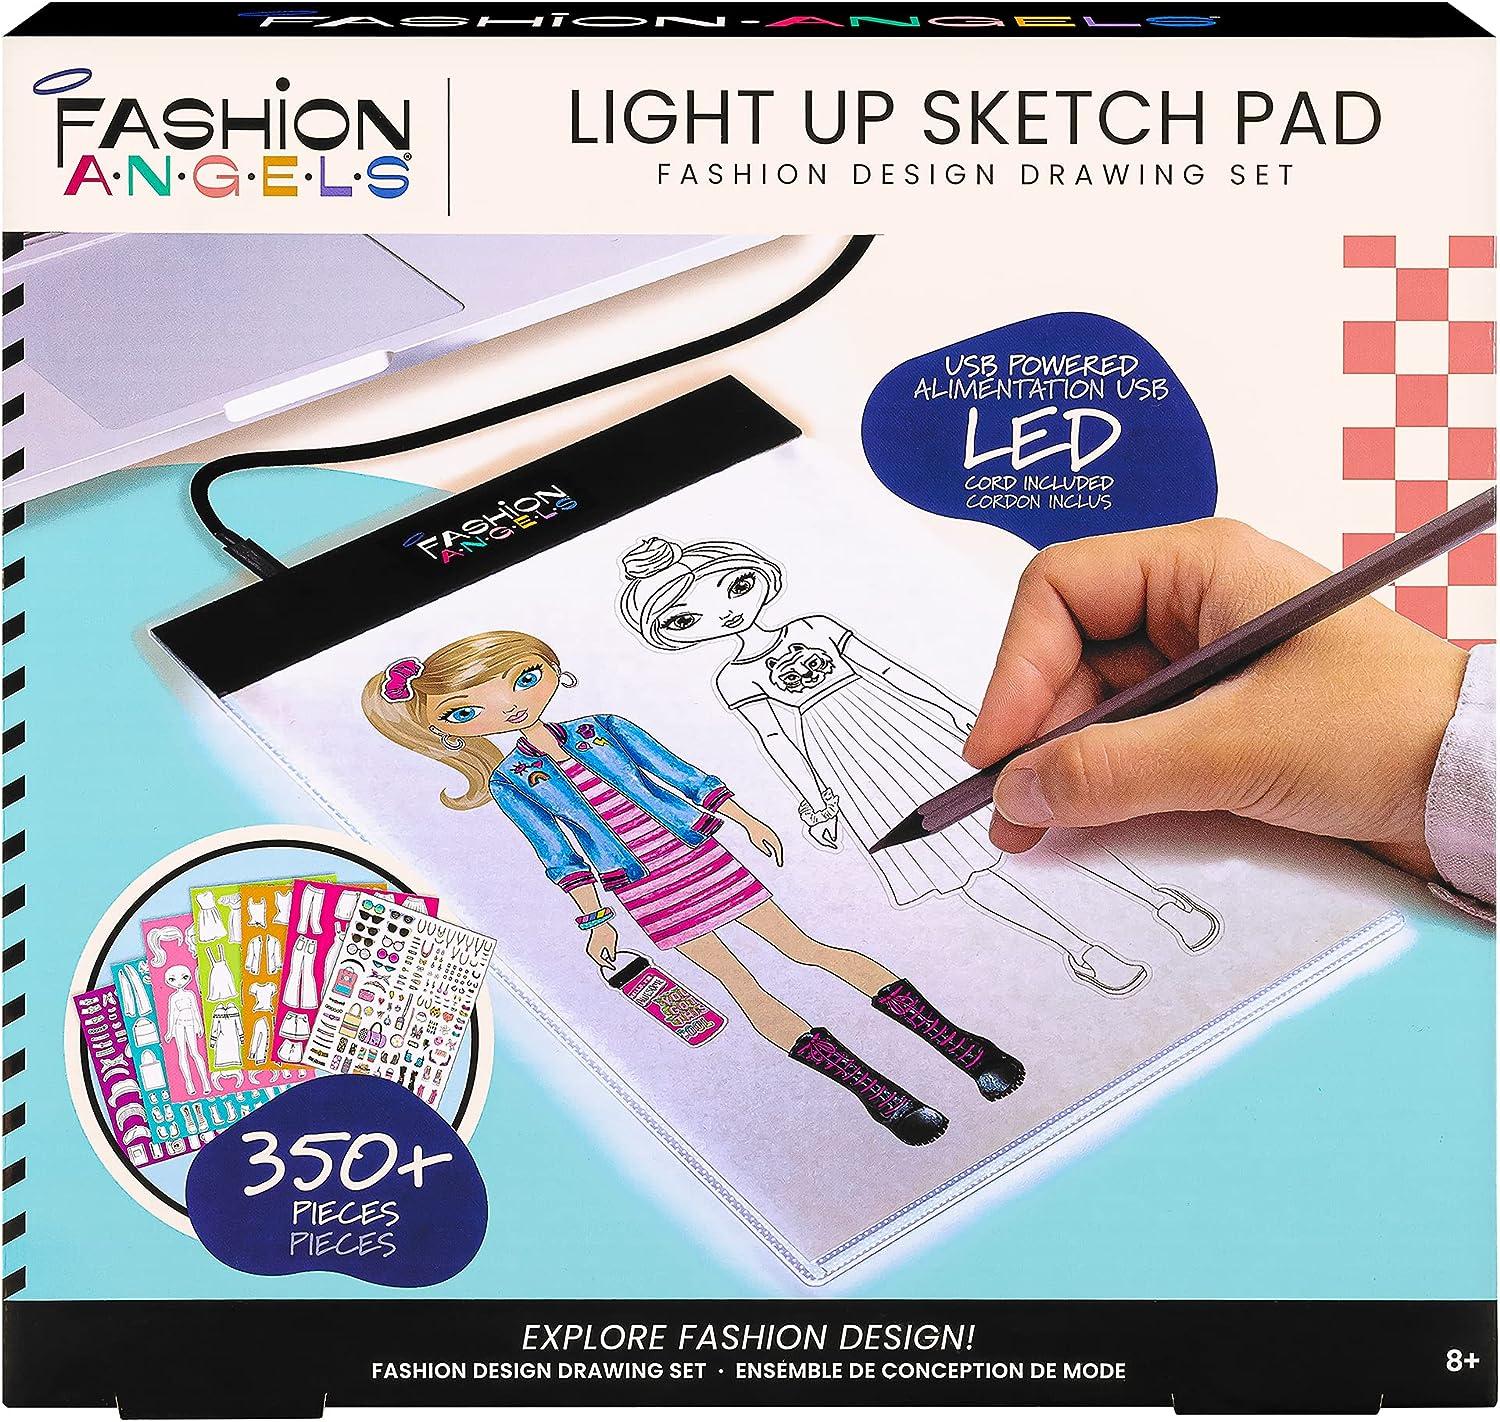 Fashion Design Light Pad Sketch Set - Fashion Angels